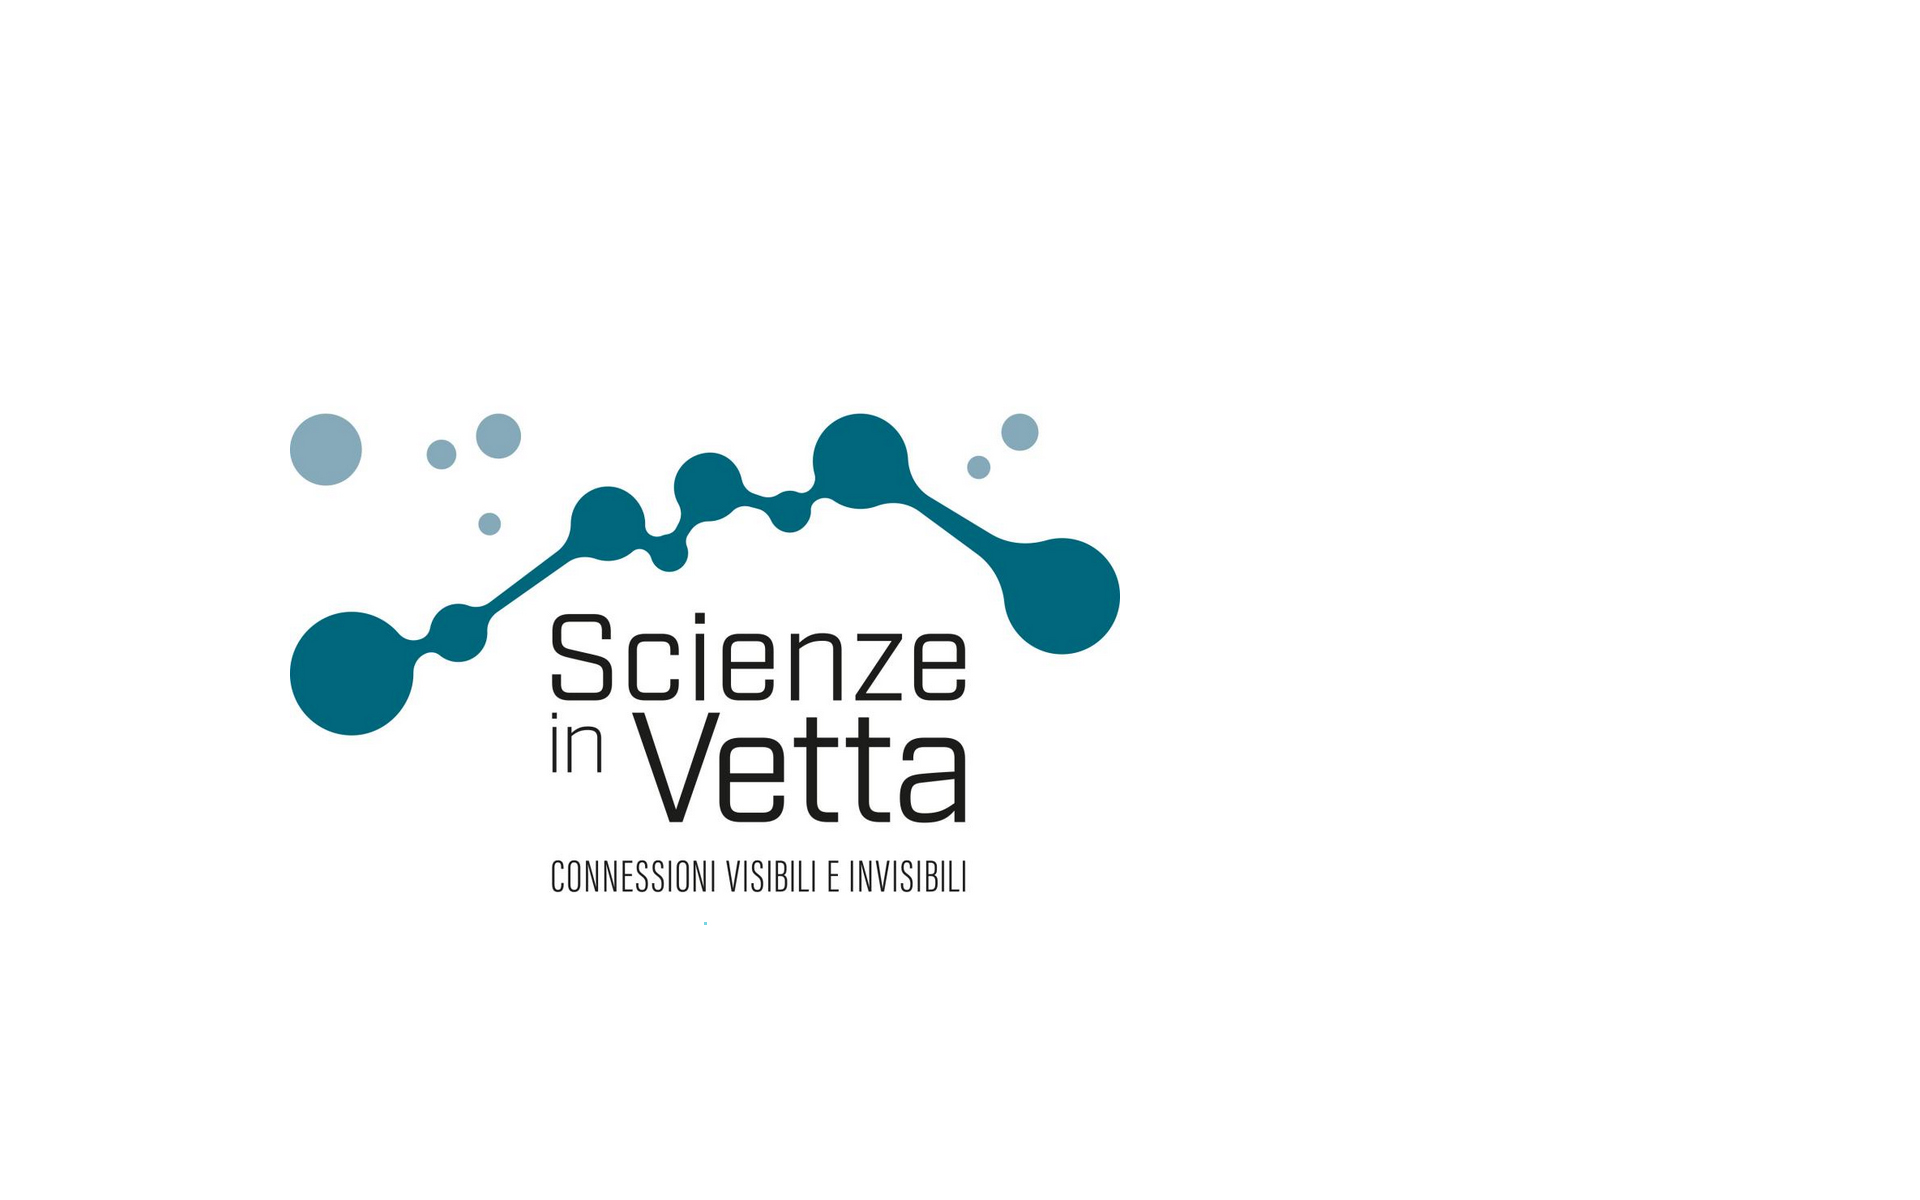 A Courmayeur, Scienze in Vetta 2020